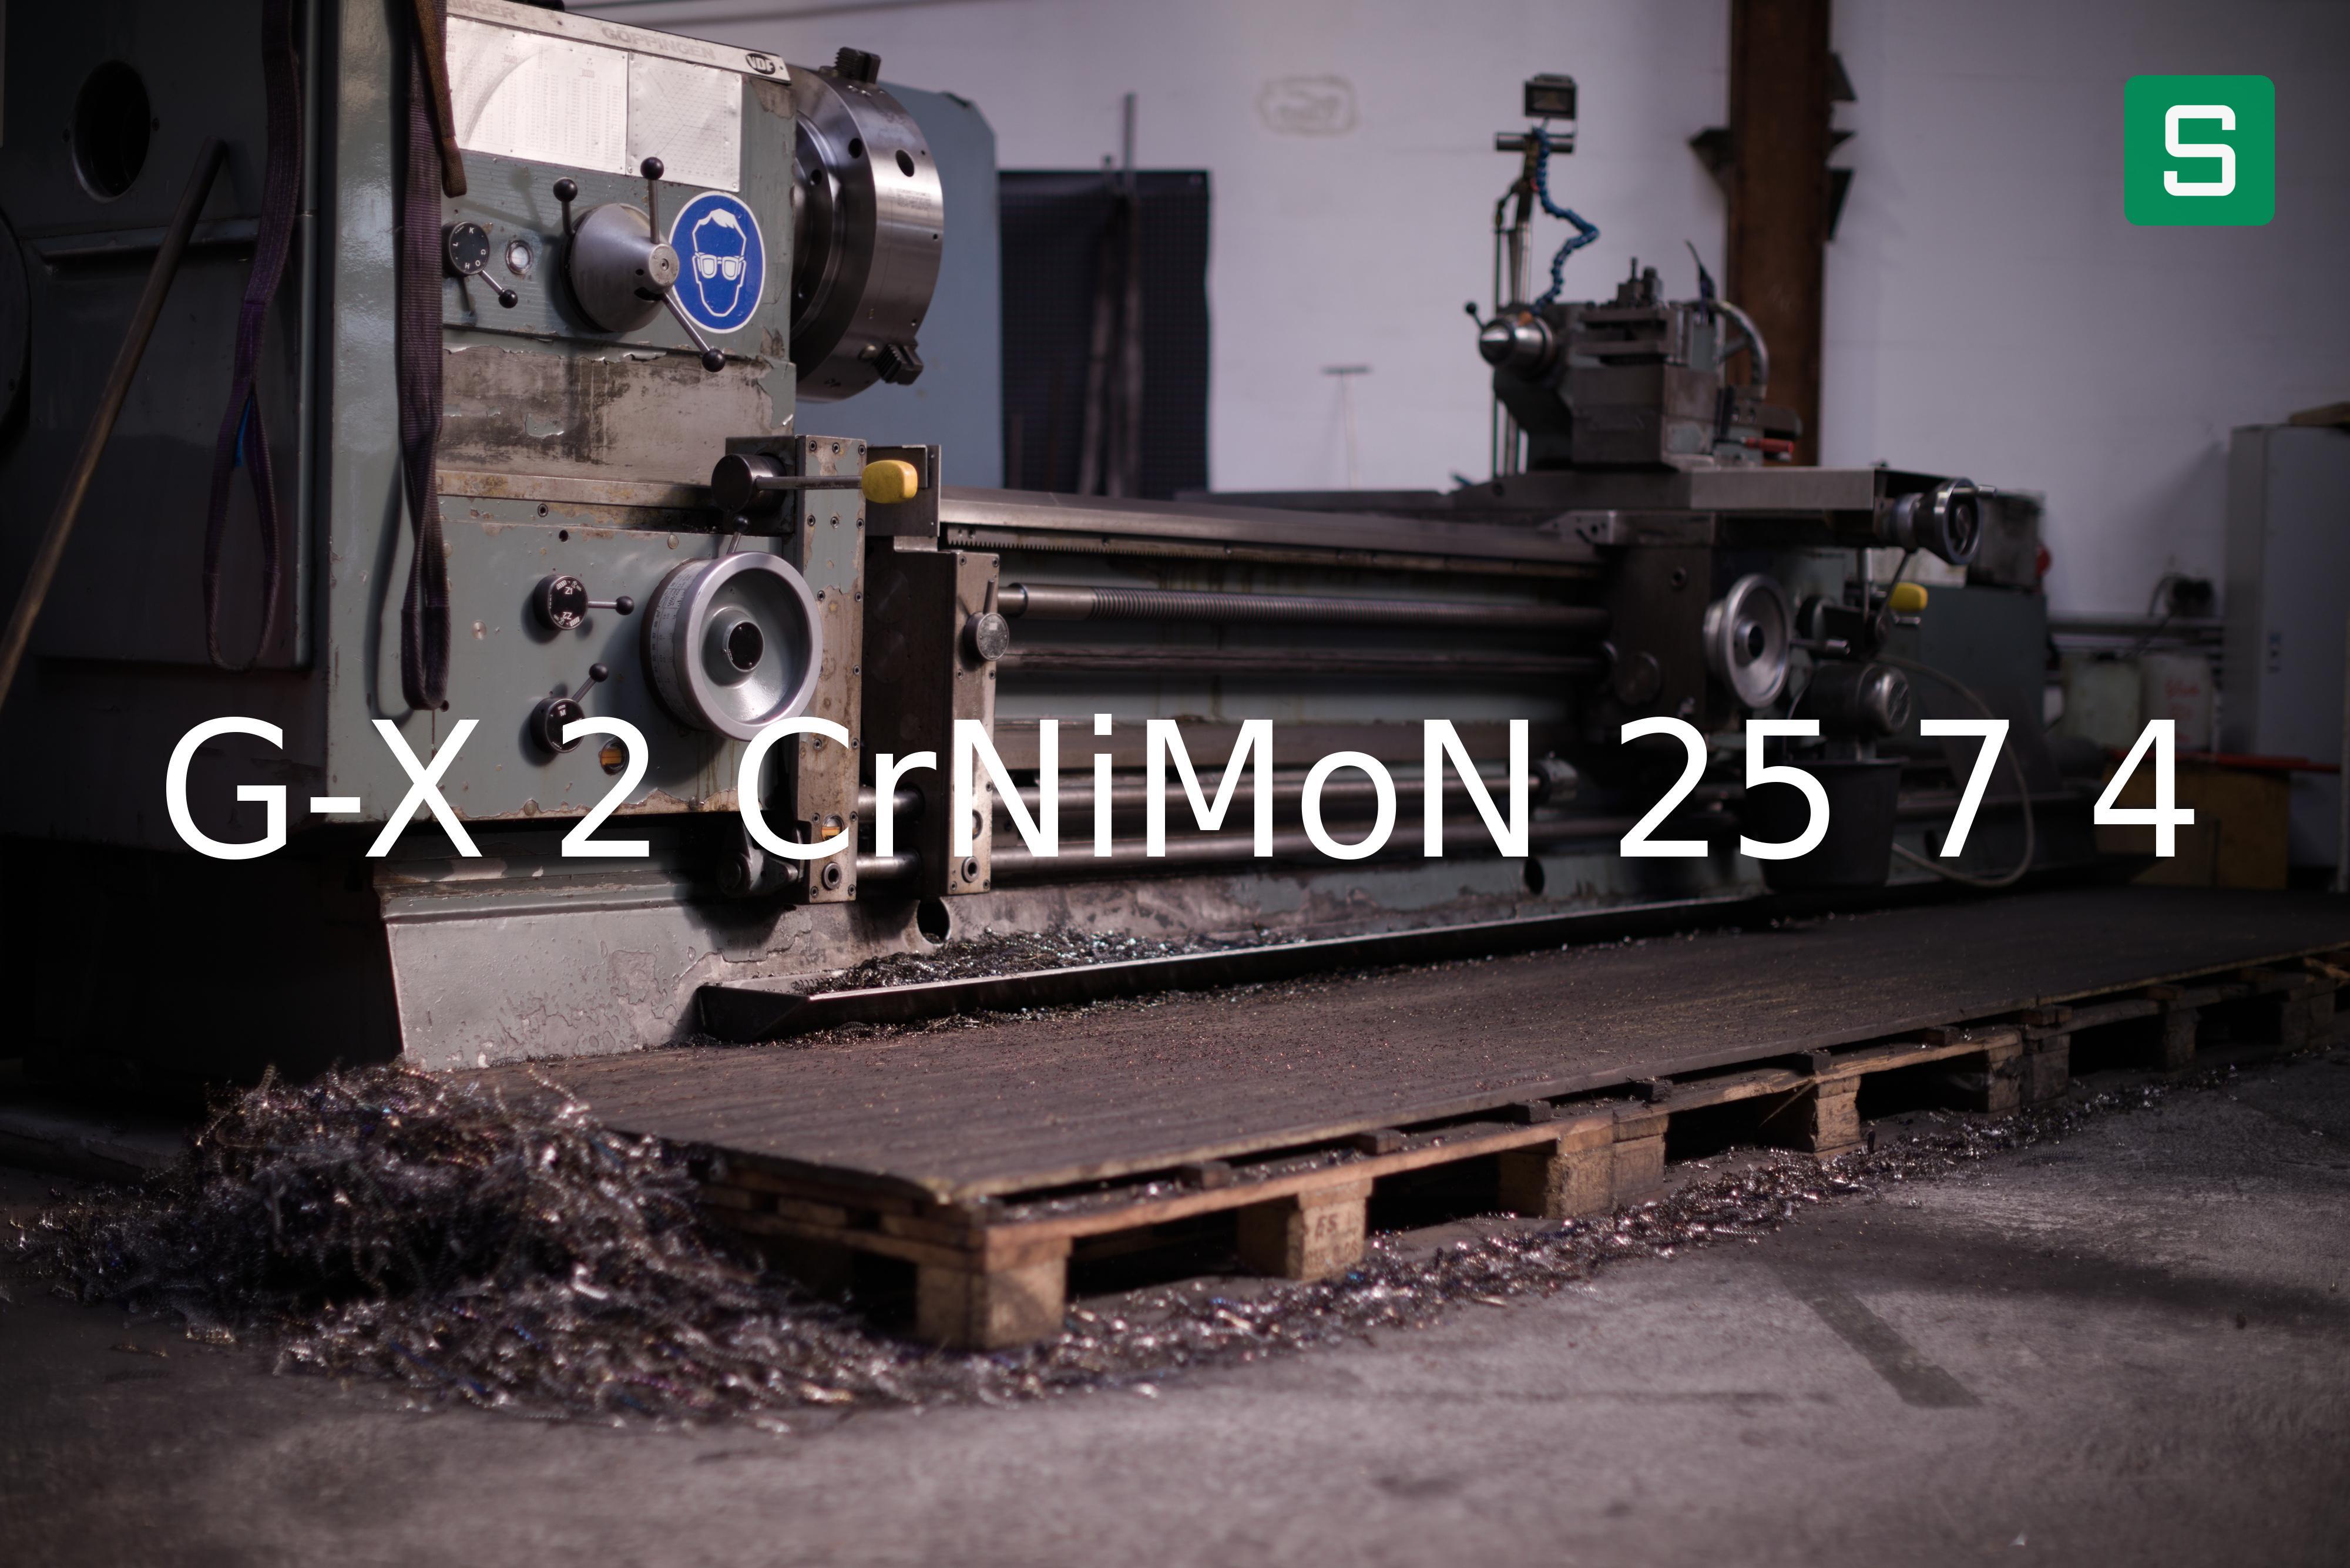 Steel Material: G-X 2 CrNiMoN 25 7 4